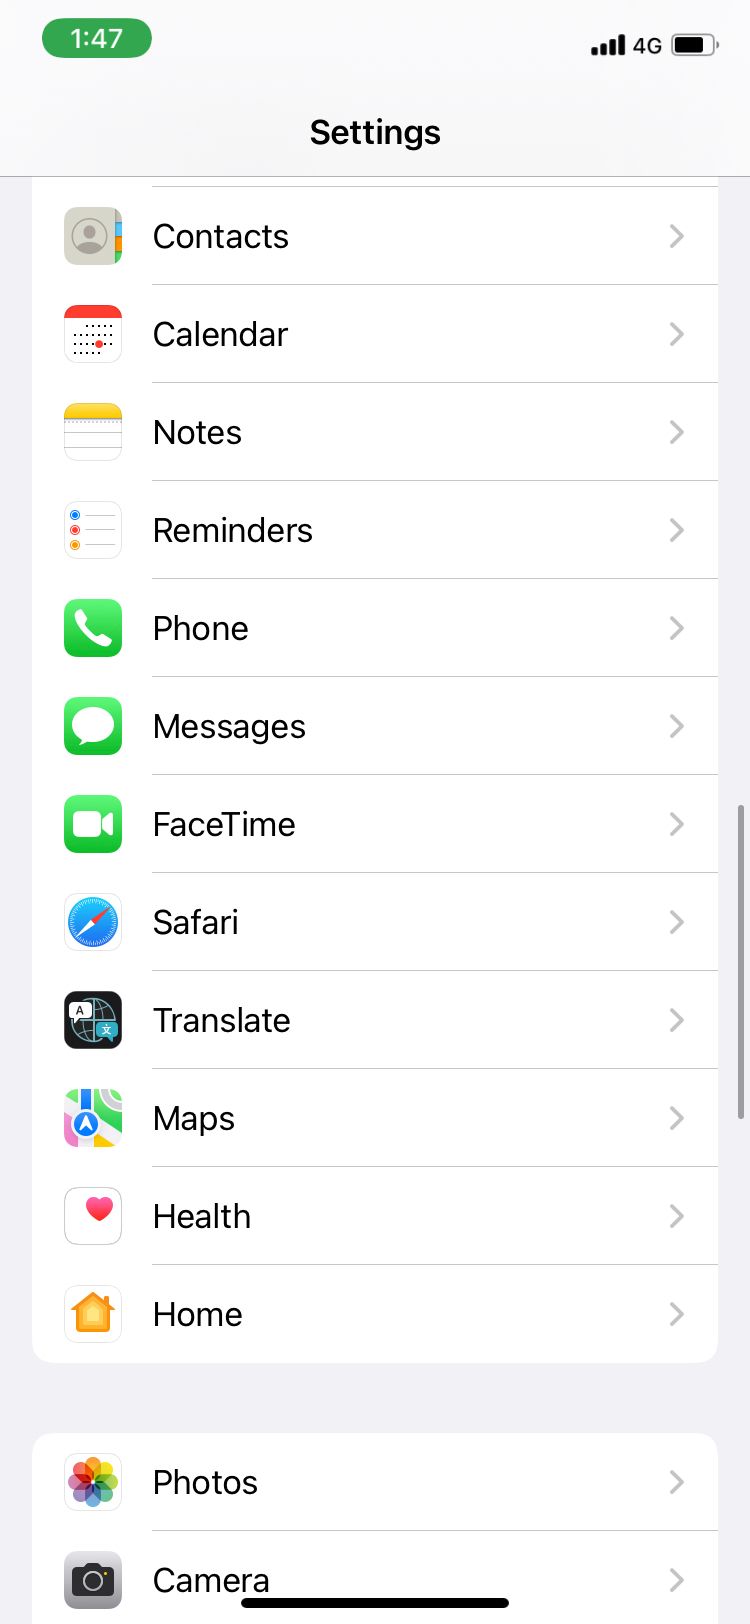 Safari settings on iPhone